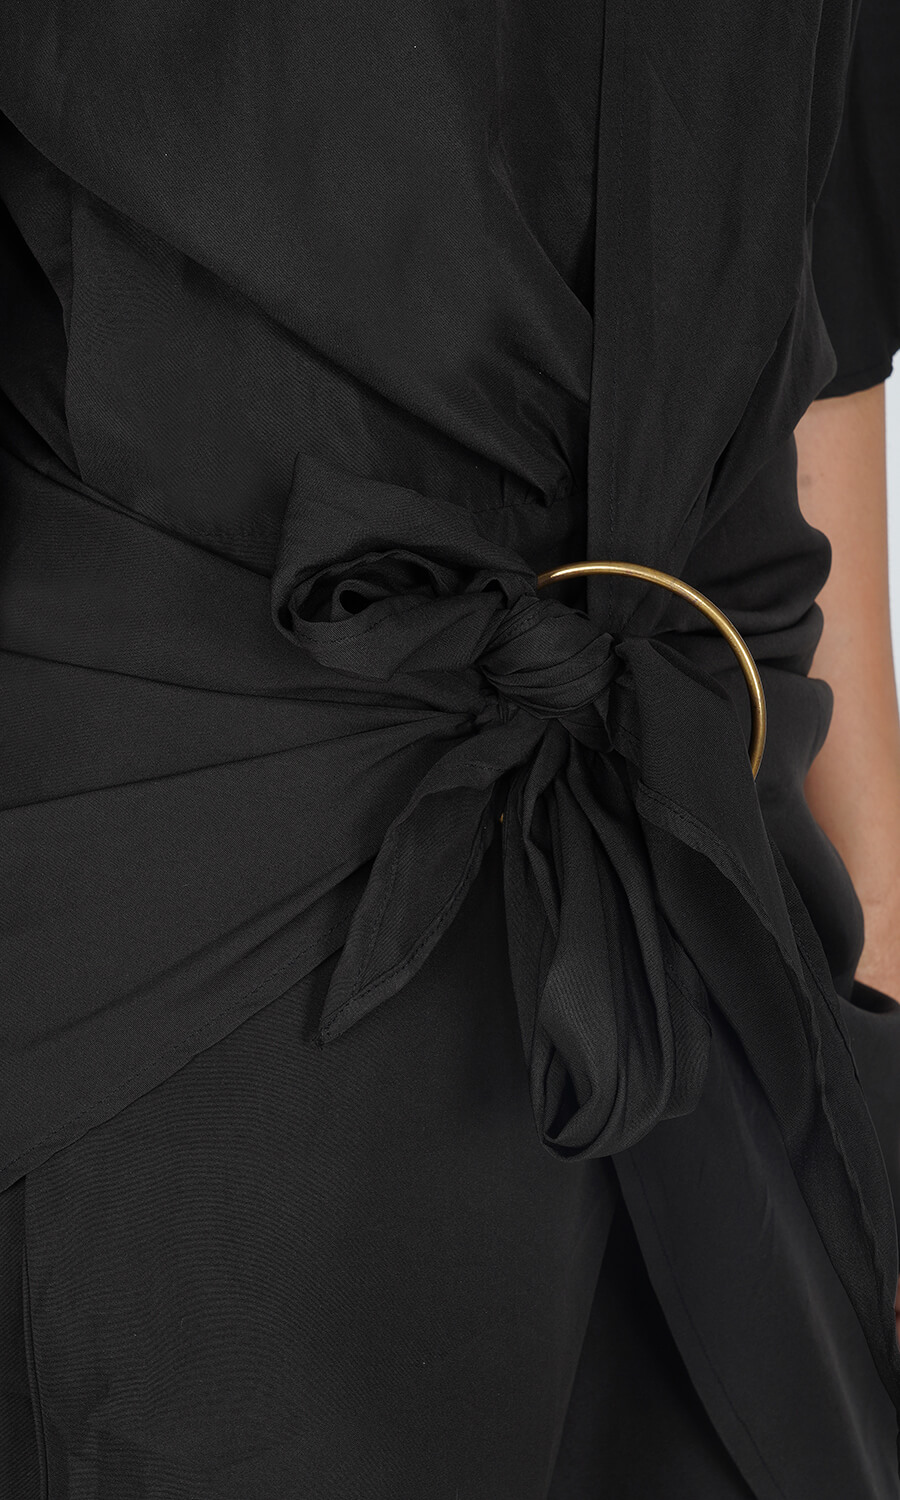 Kovet Black Wrap-Around Dress